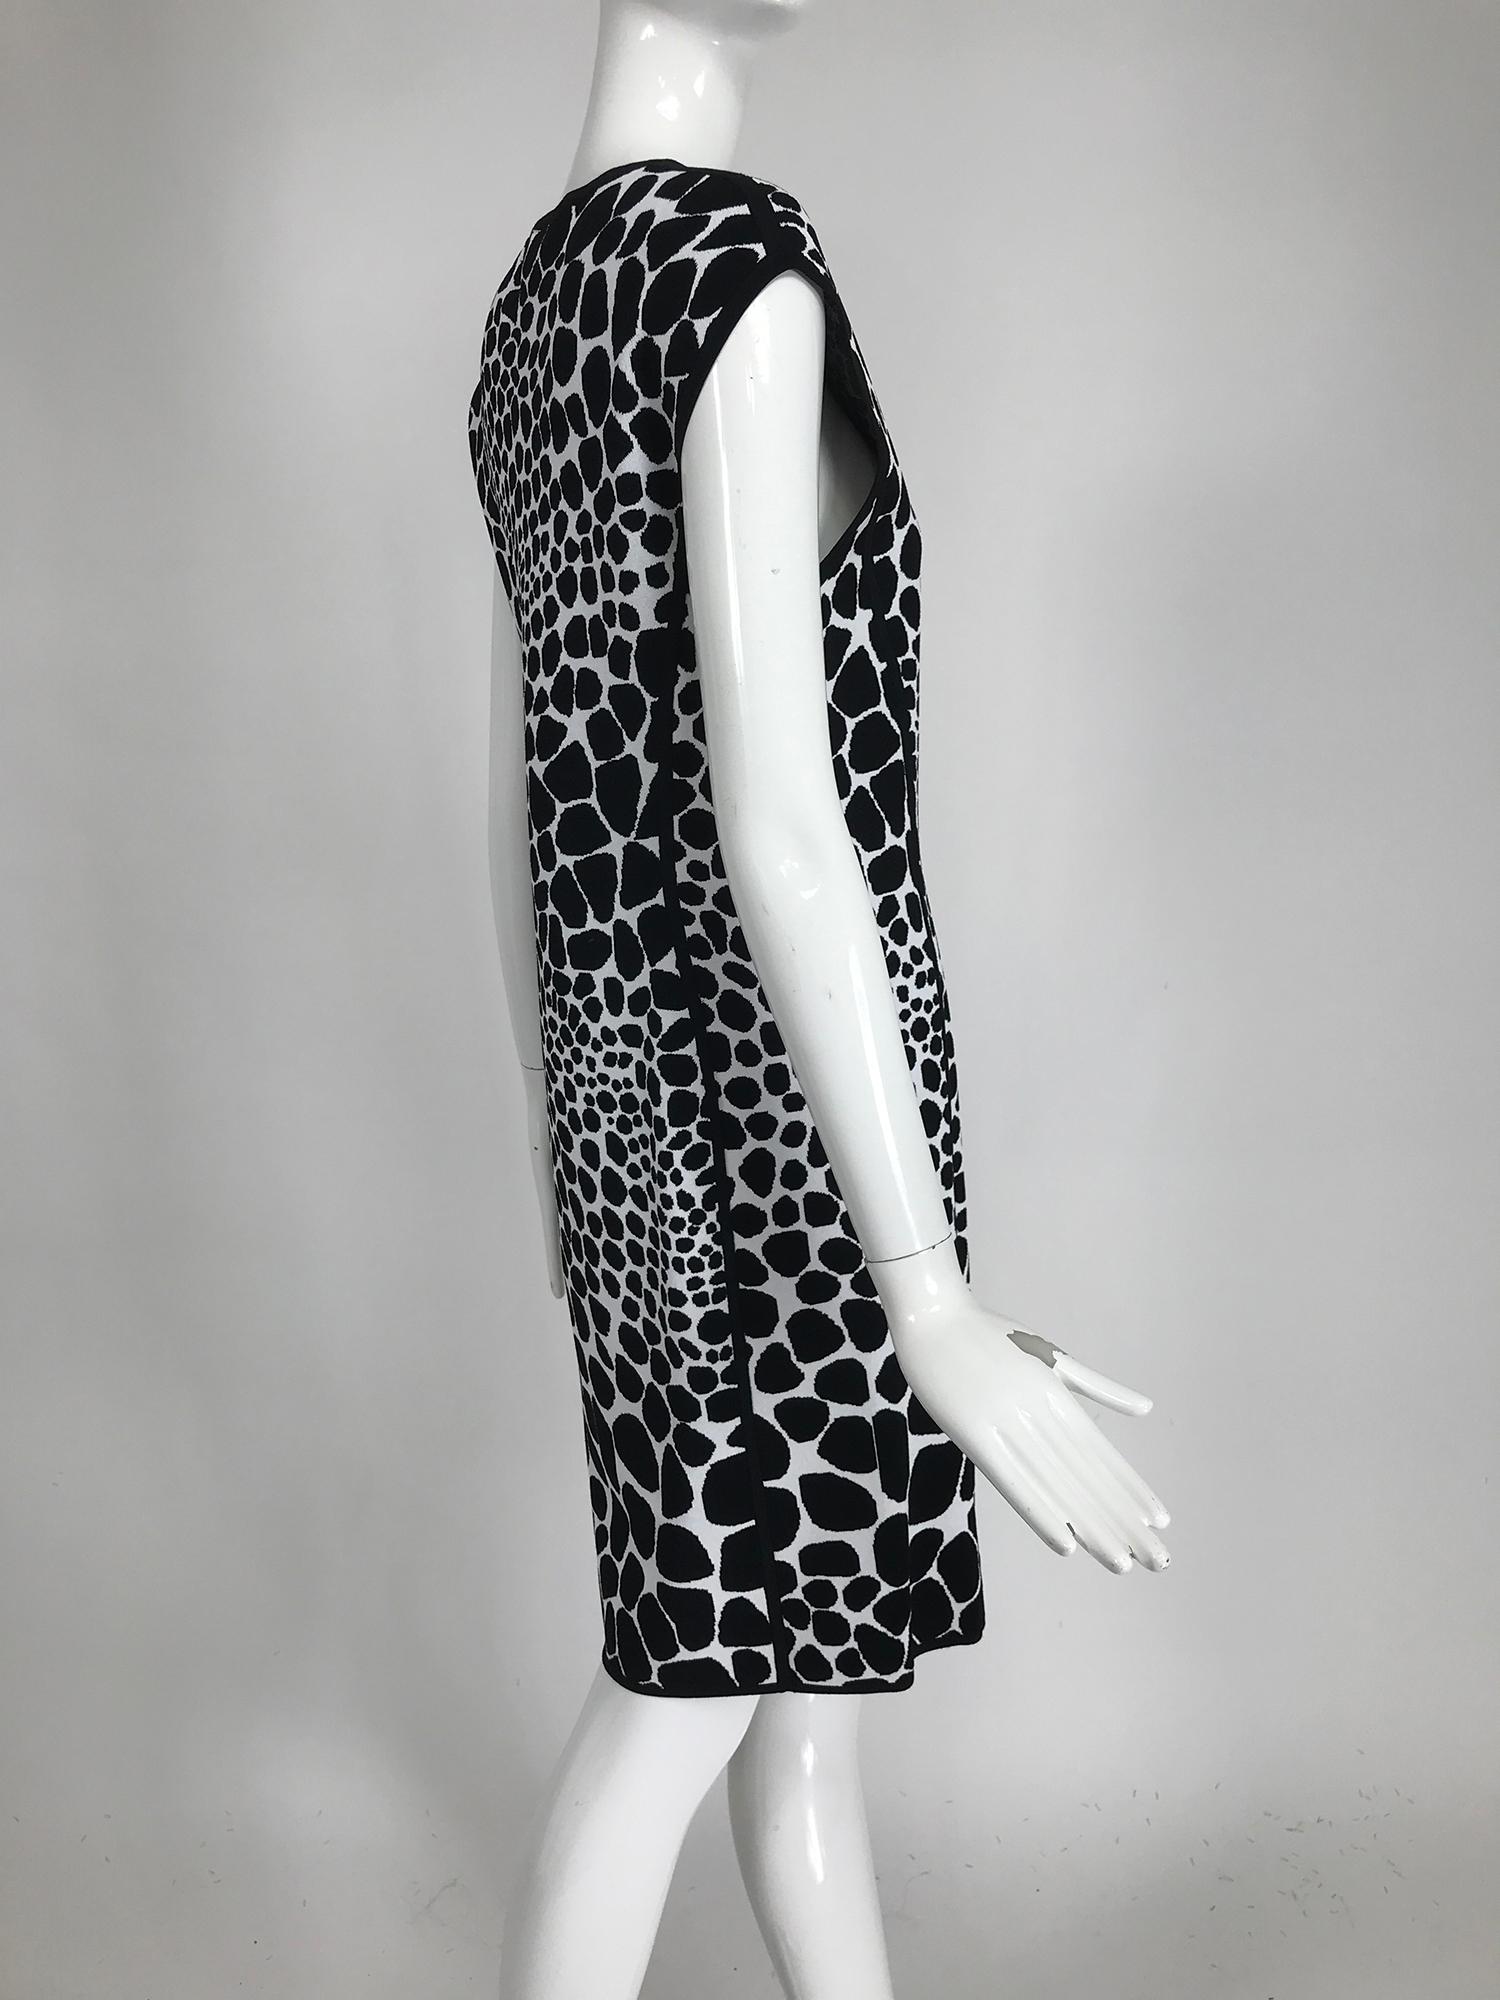 Michael Kors Black & White Knit Stretch Animal Print Dress Large 1